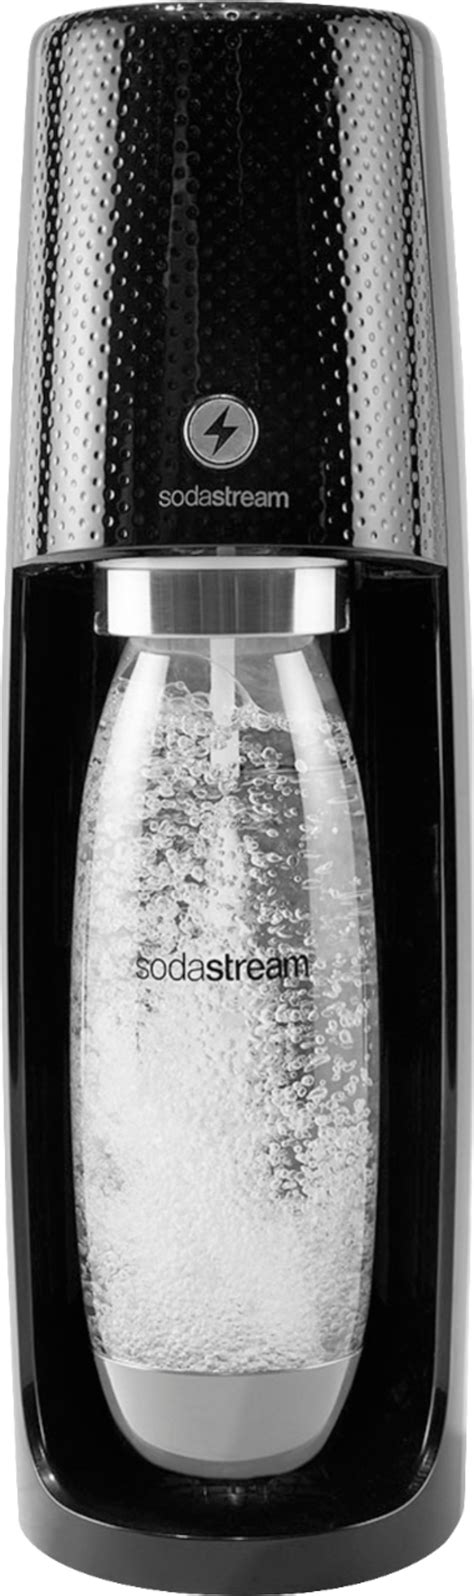 sodastream fizzi  touch sparkling water maker kit black   buy soda stream